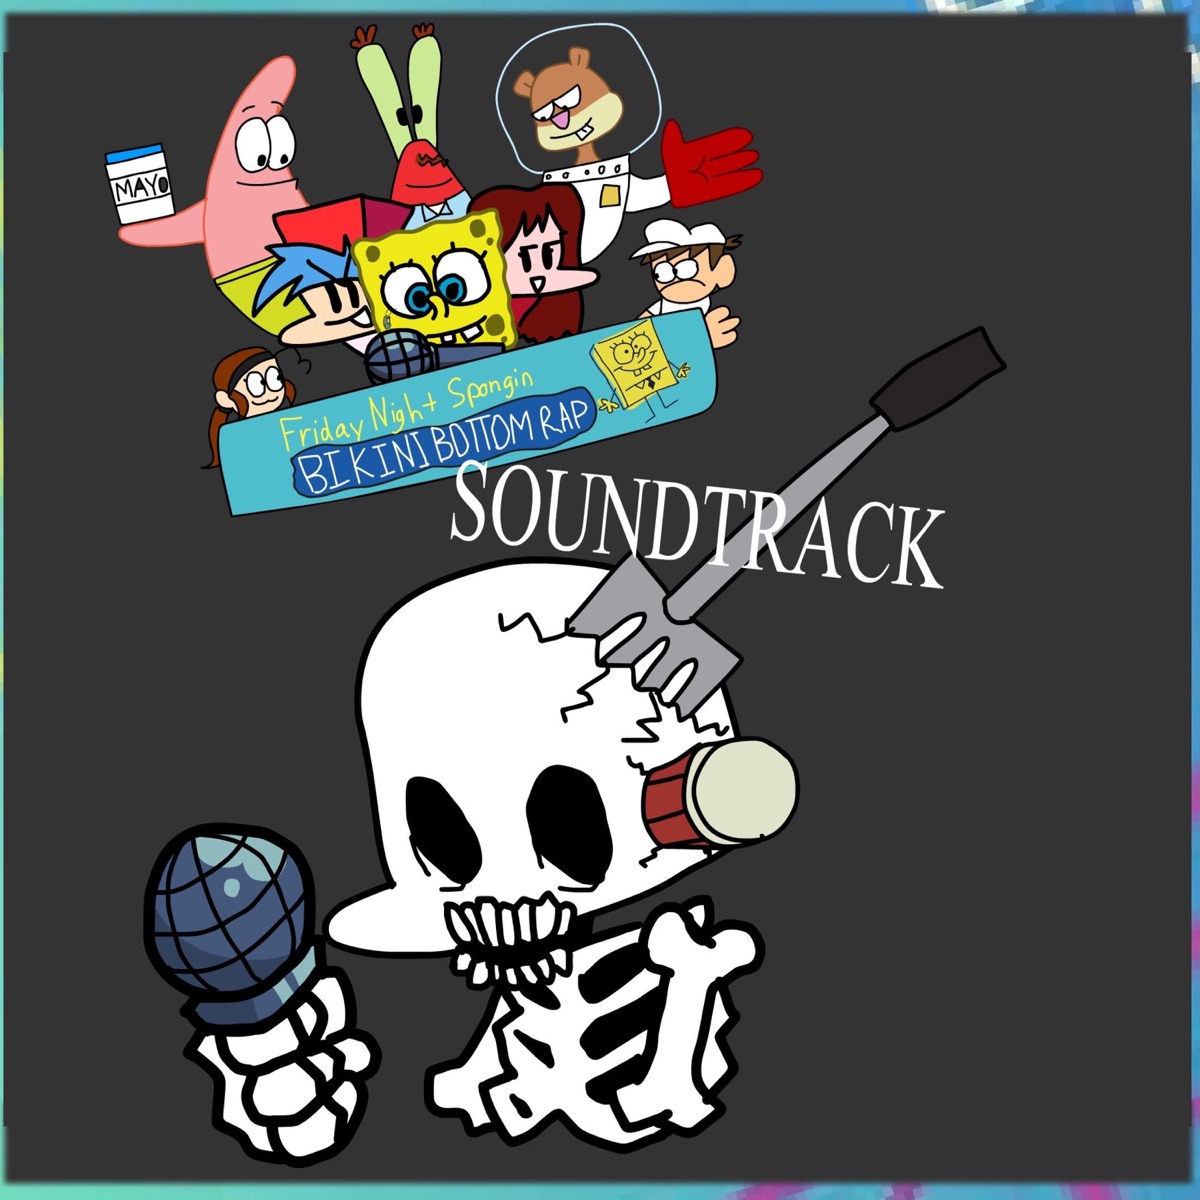 Friday Night Spongin' Bikini Bottom Rap Battles Original Soundtrack - Album  by Spunchbop Team - Apple Music